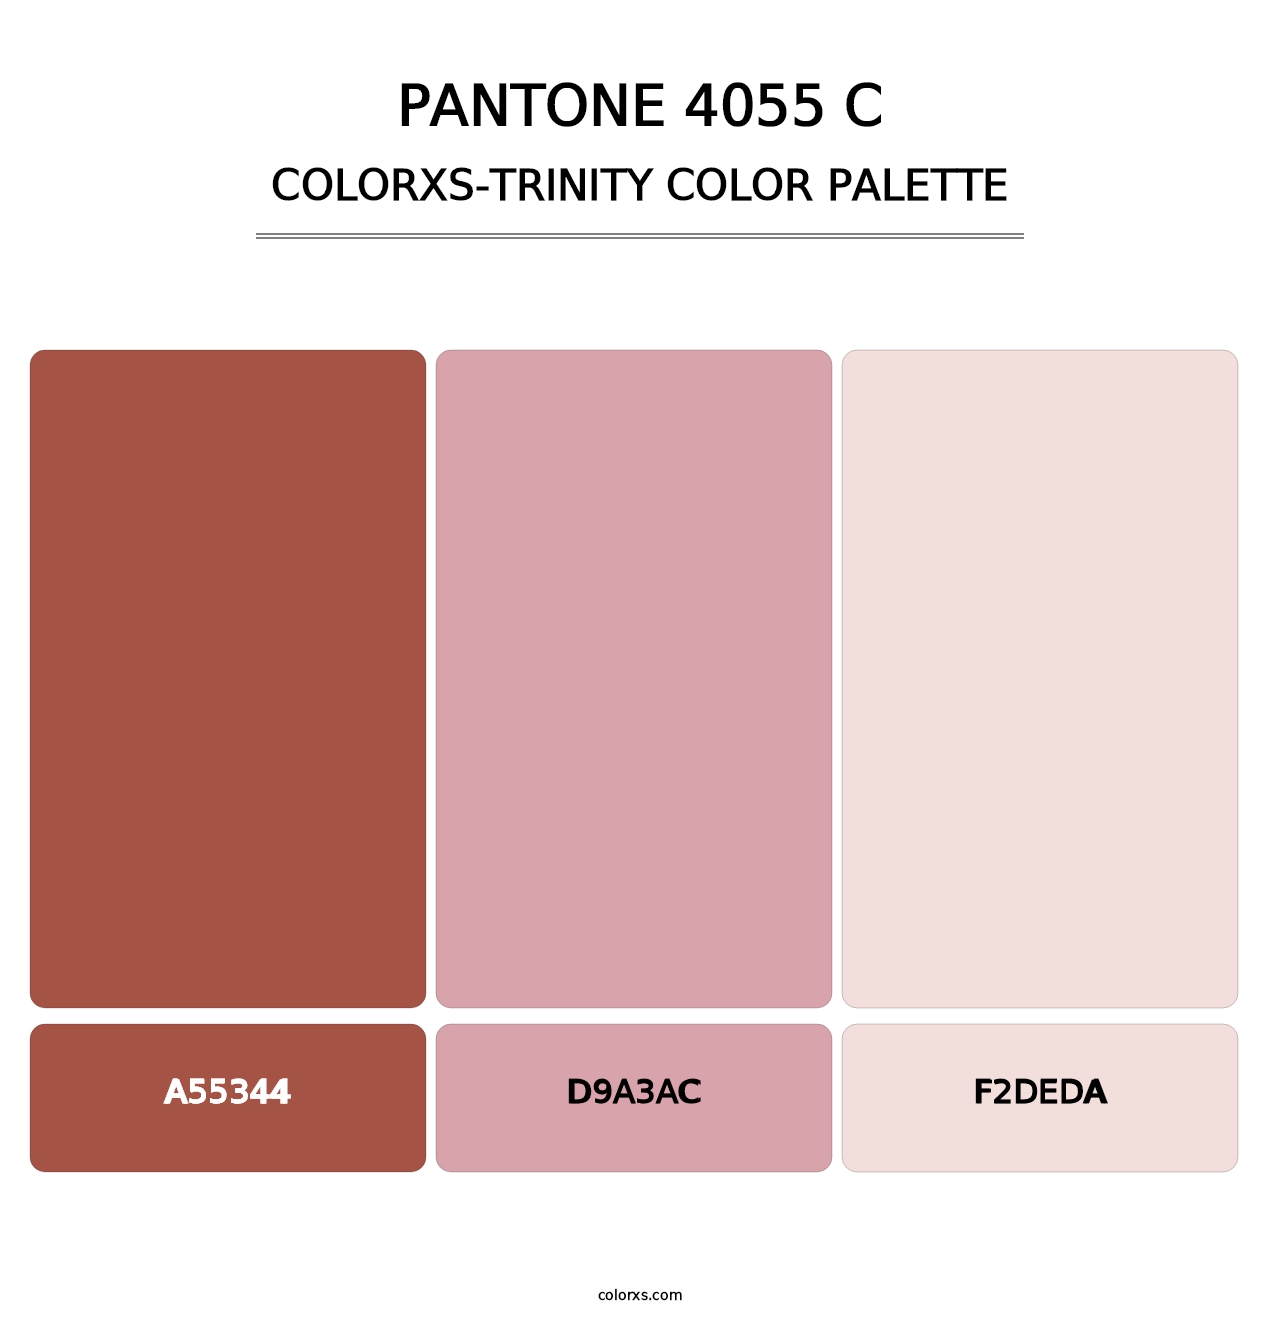 PANTONE 4055 C - Colorxs Trinity Palette